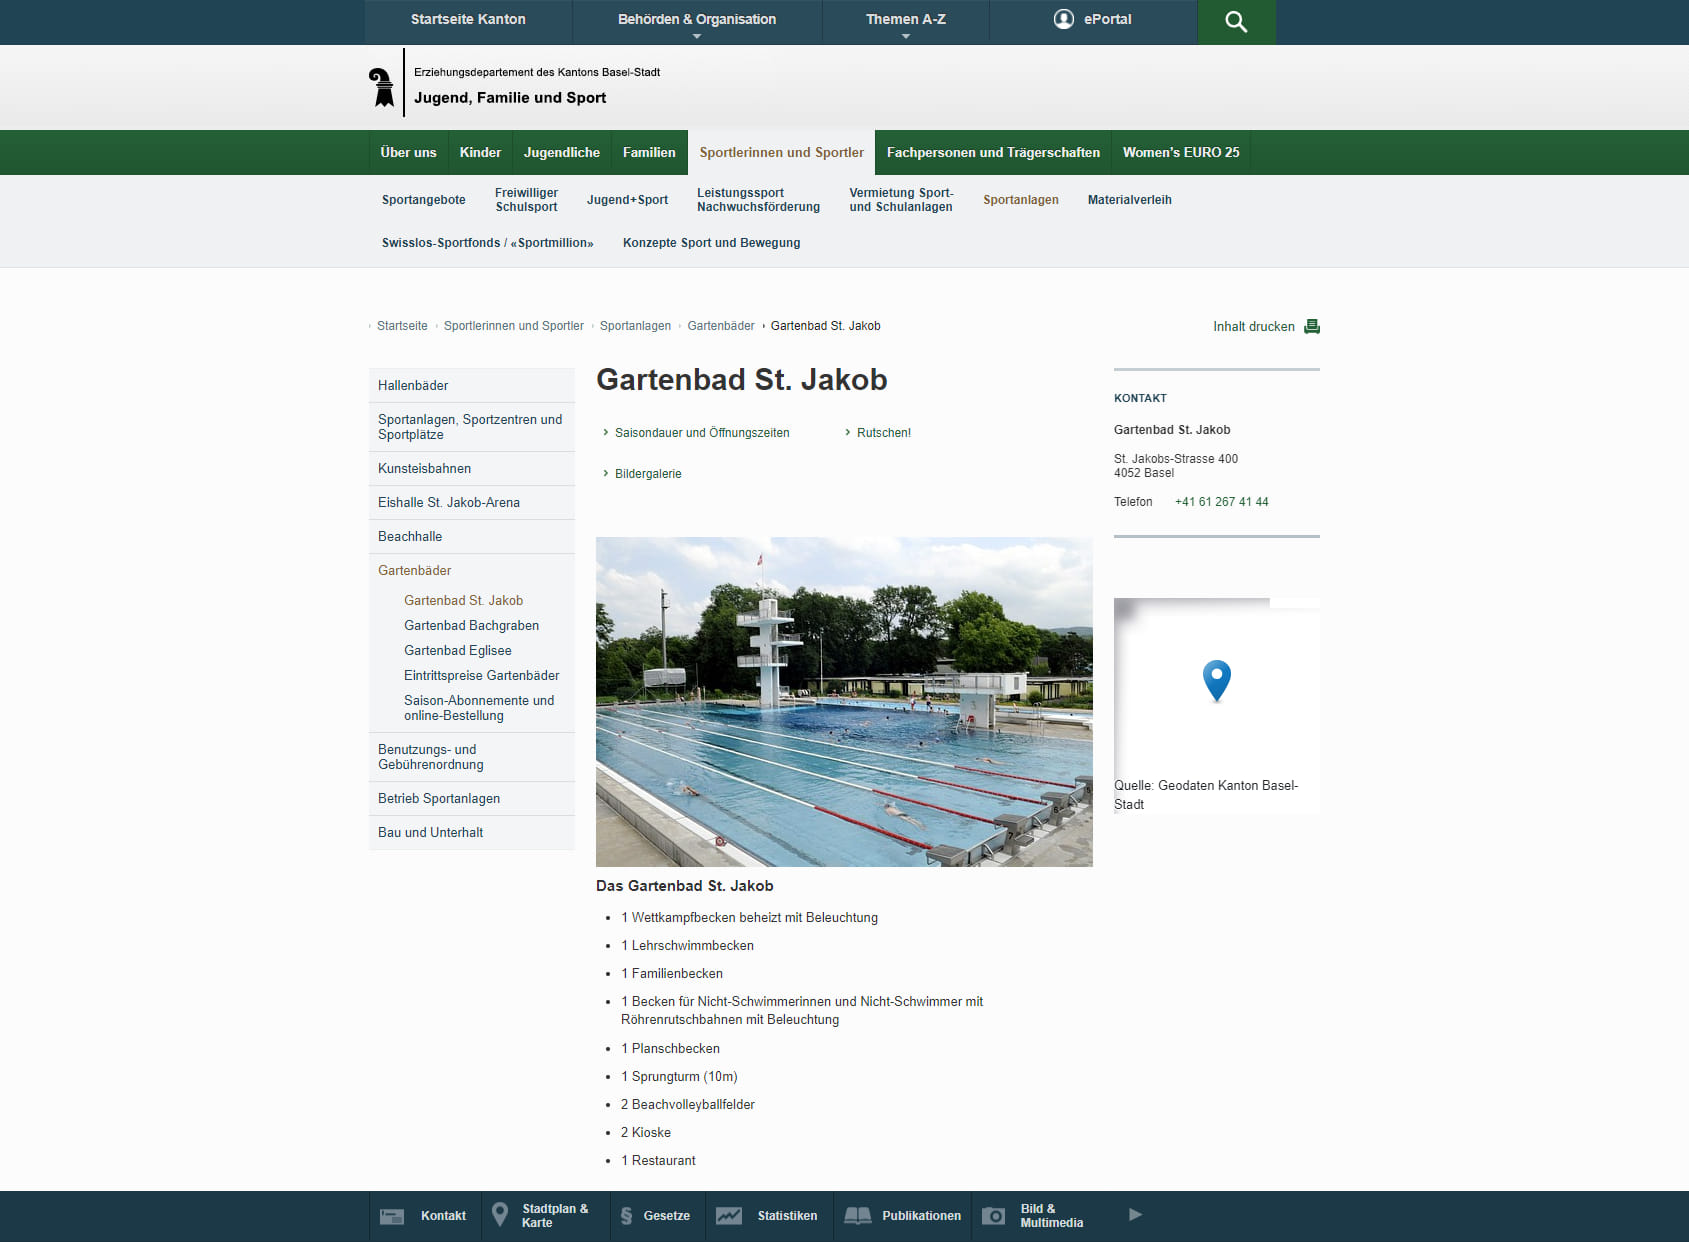 Gartenbad & Sportbad St. Jakob